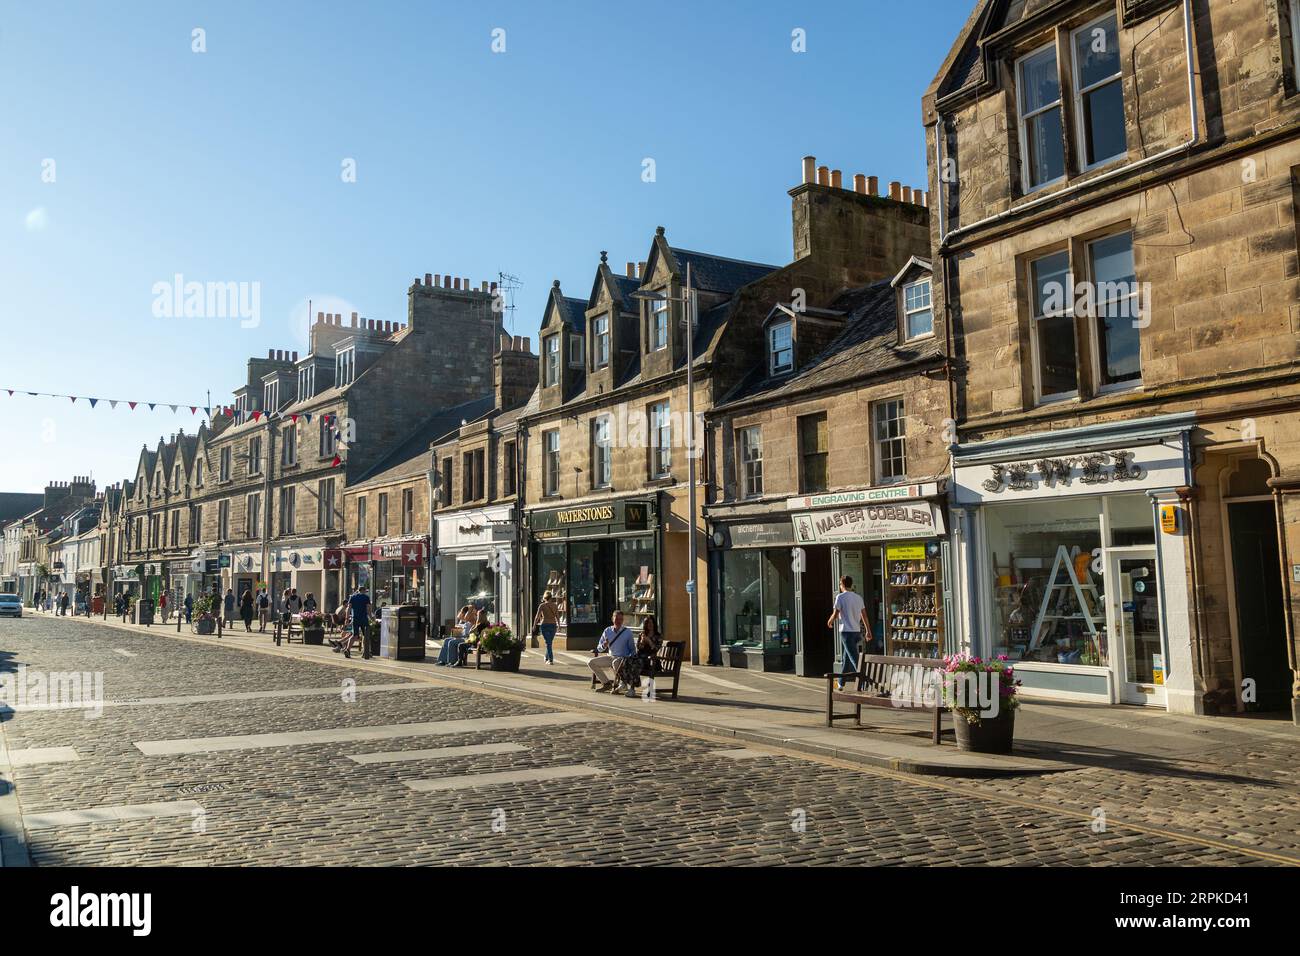 The Cobblestone road in Market Street, St Andrews, Fife, Scotland Stock Photo